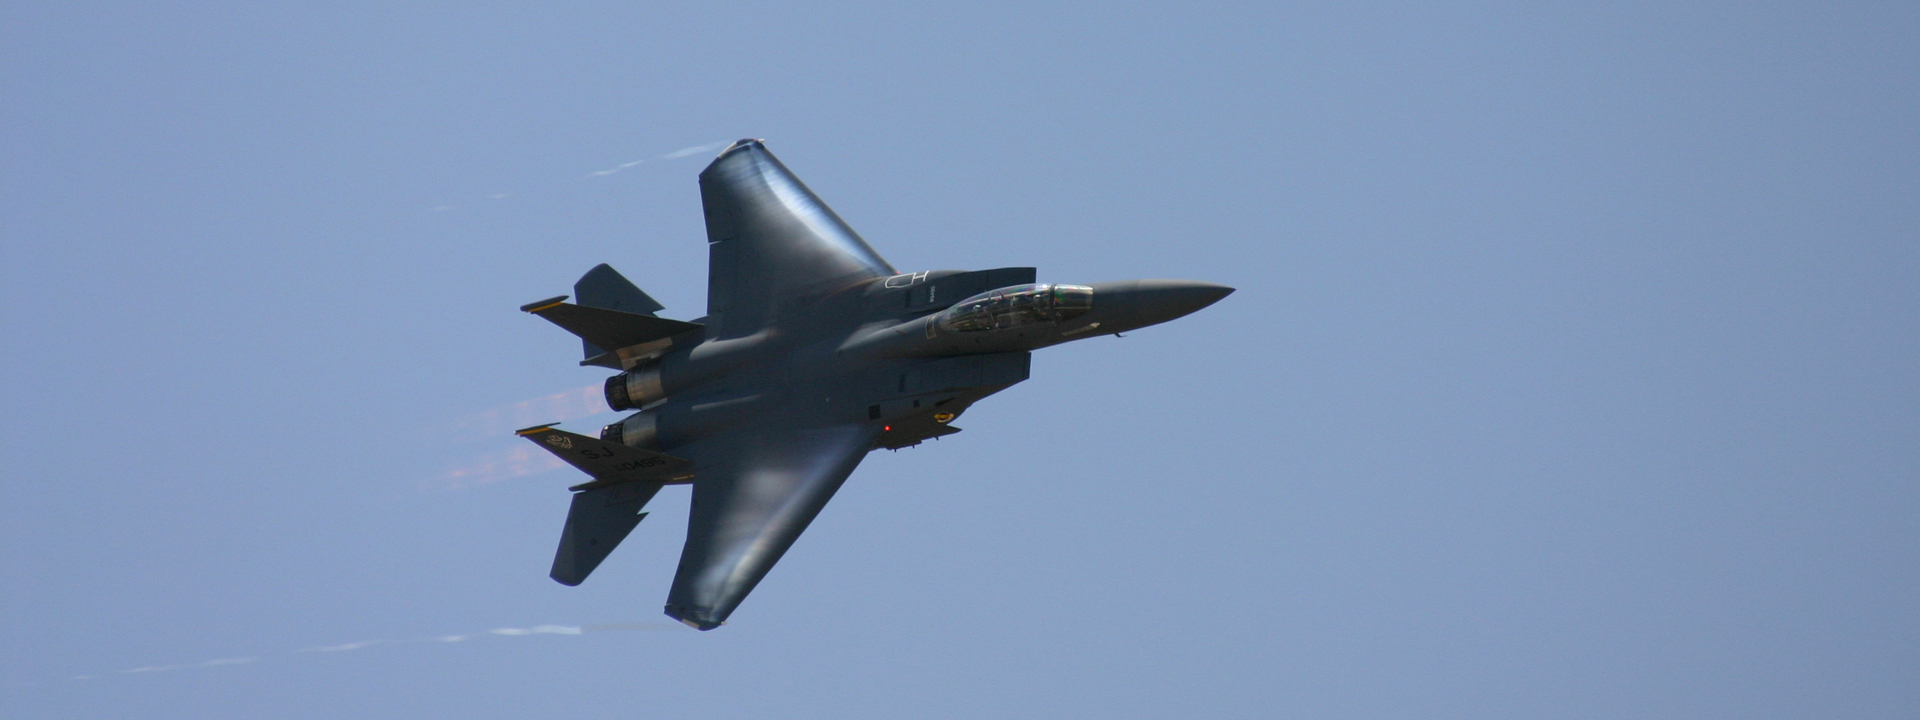 F-15 Eagle with Vapor